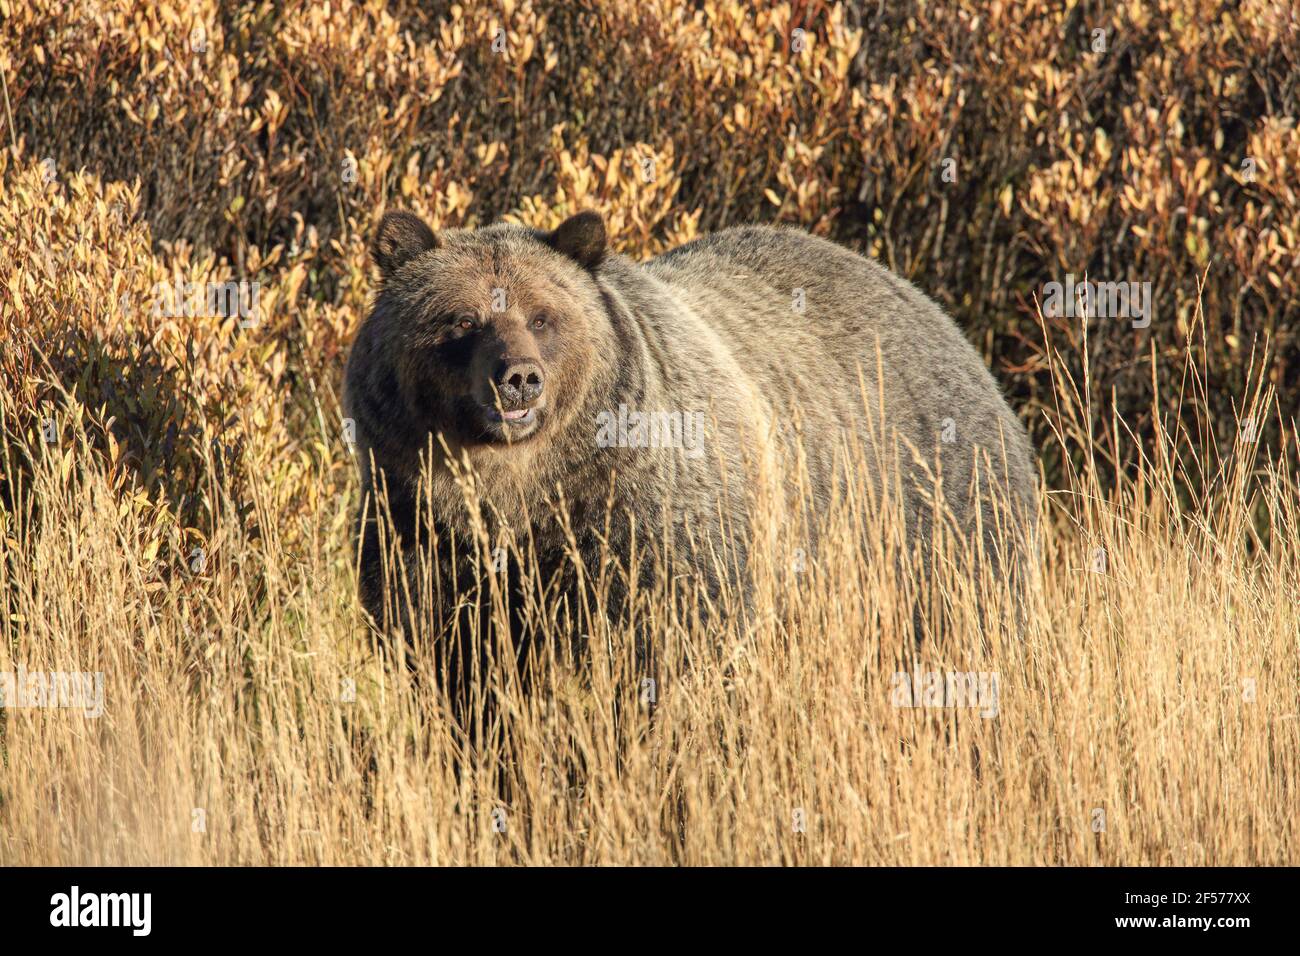 Grizzly bear in autumn habitat Stock Photo